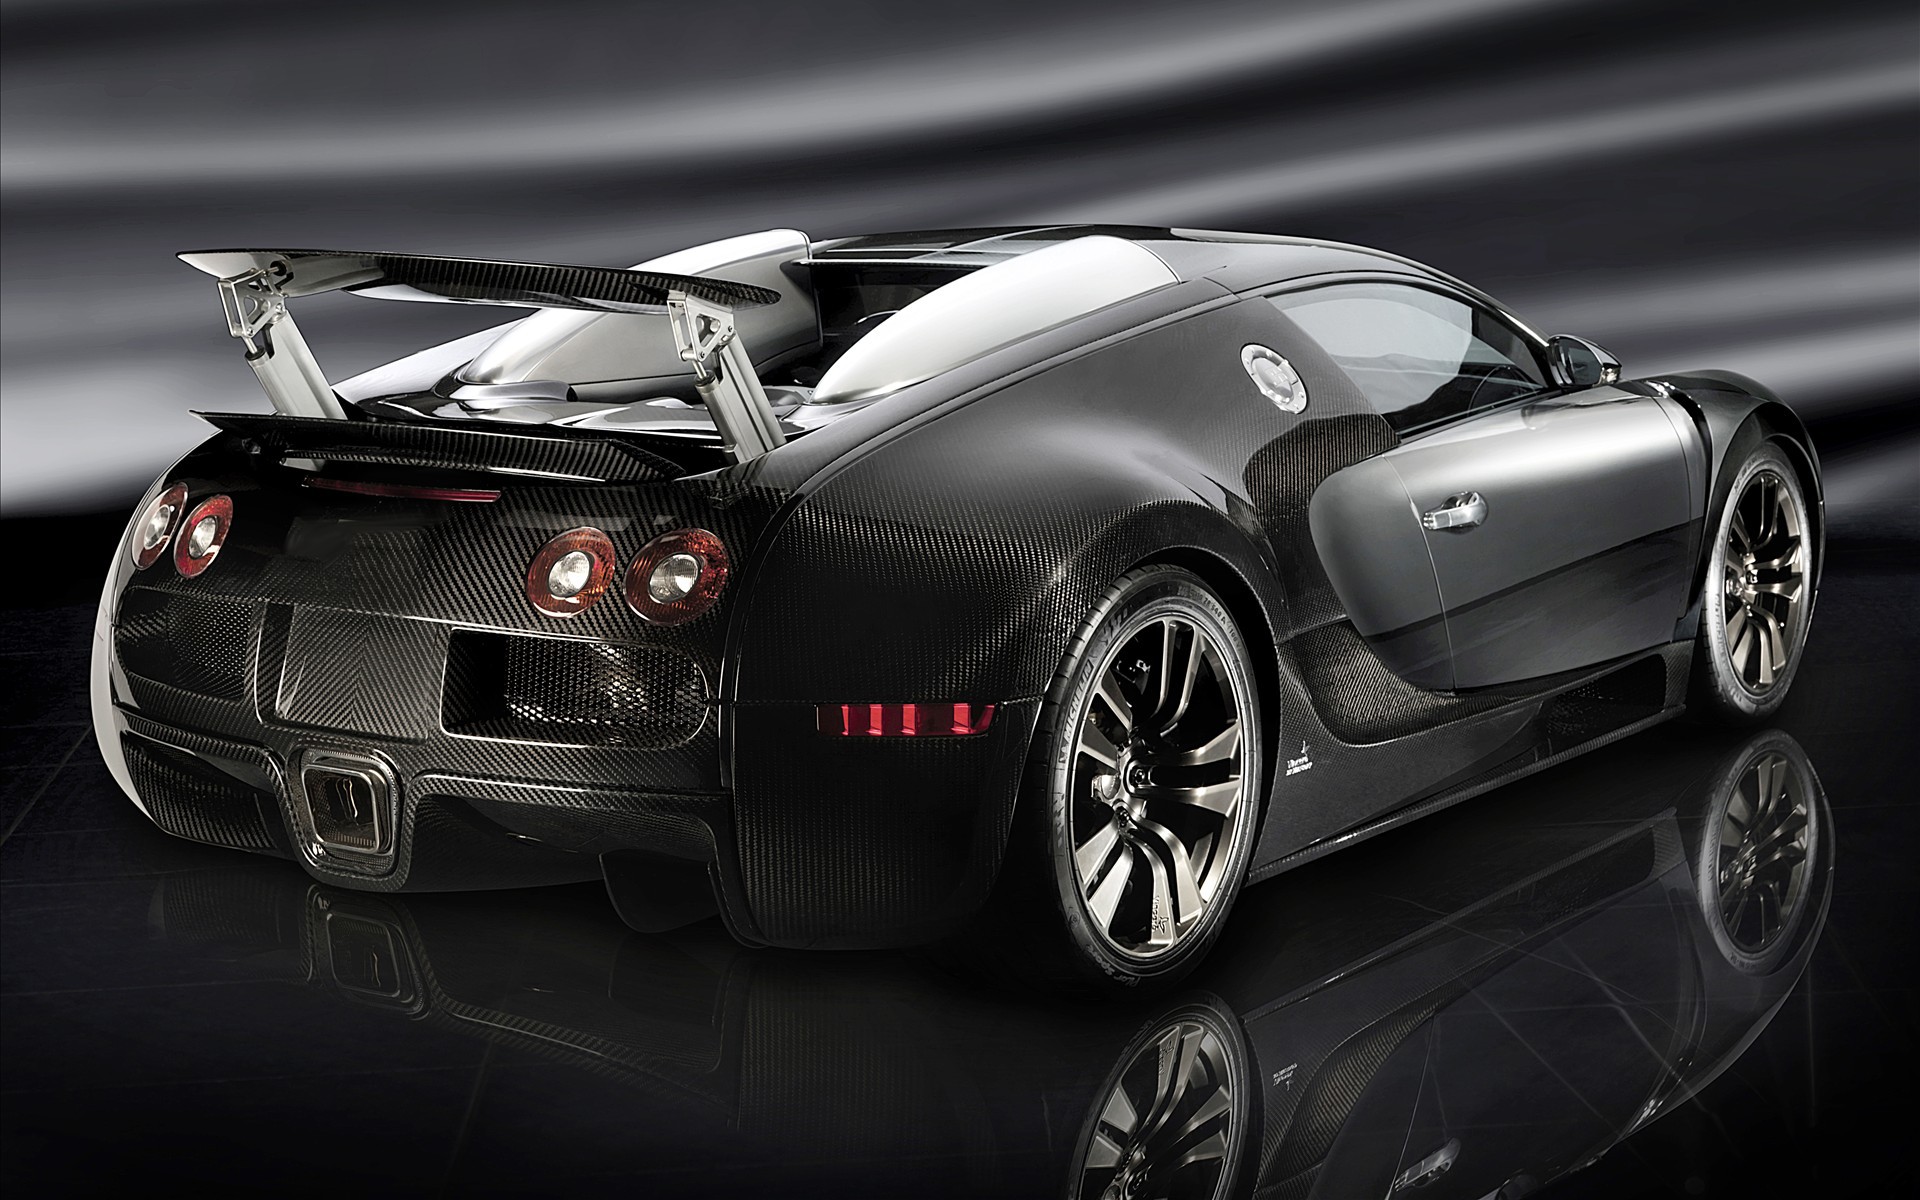 Black Bugatti Veyron Supersport Wallpaper And Image